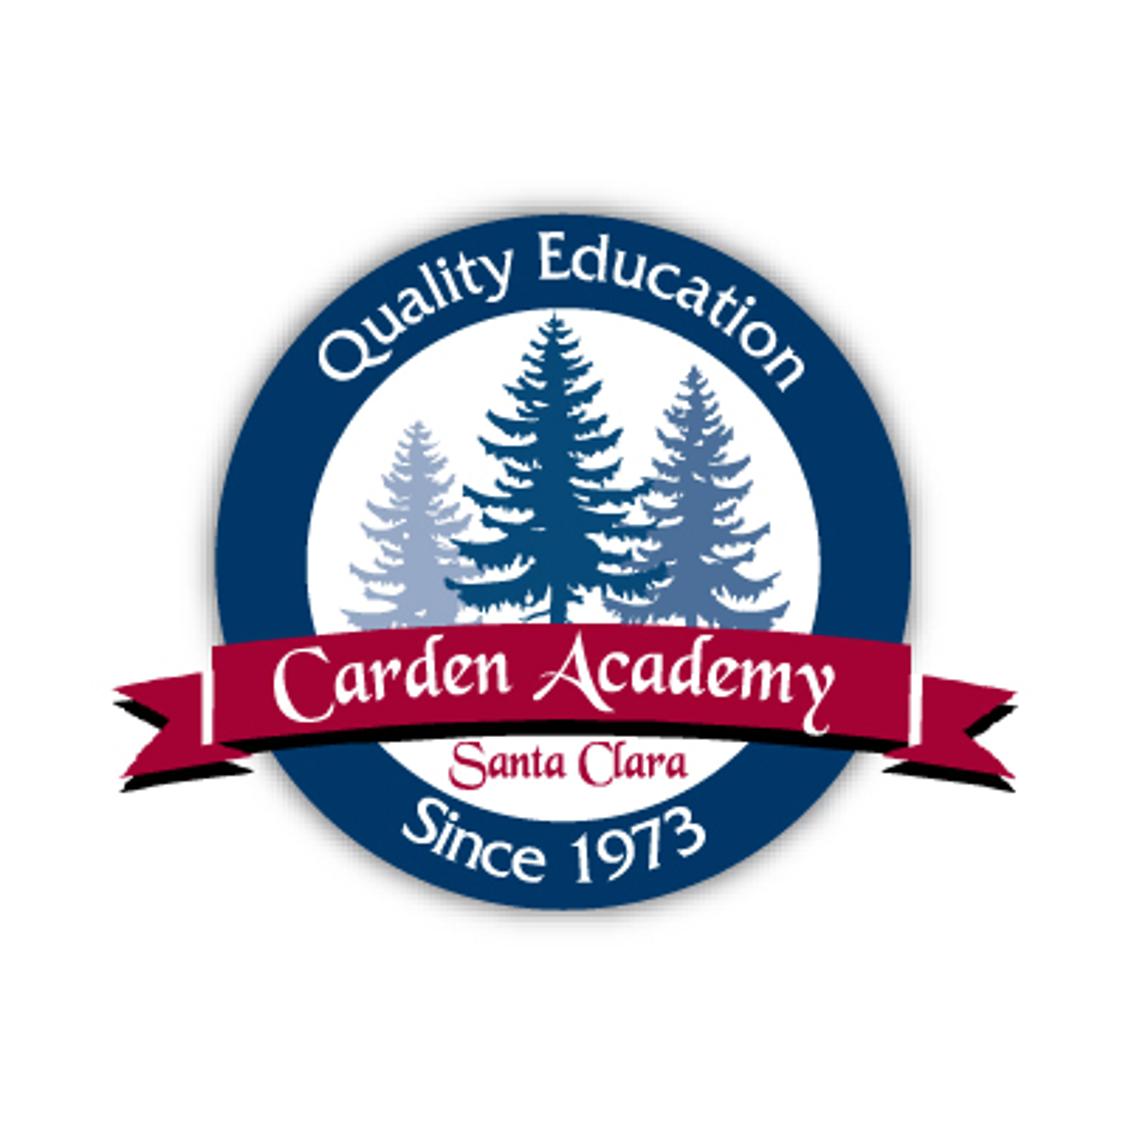 Carden Academy of Santa Clara Photo #1 - Carden Academy of Santa Clara has been teaching children successfully for over 36 years!